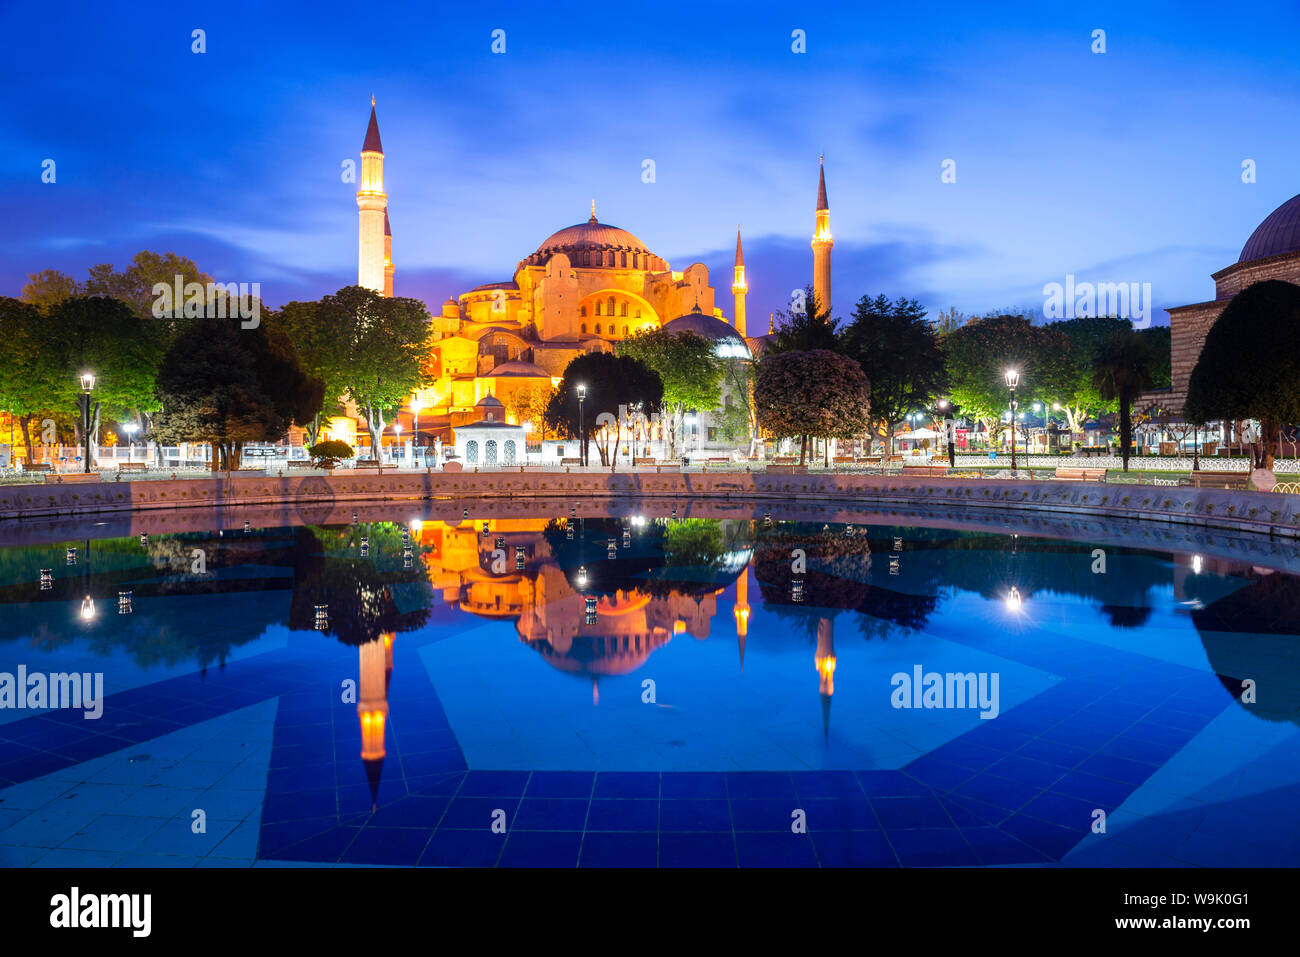 Hagia Sophia (Aya Sofya) (Santa Sofia), UNESCO World Heritage Site, reflection at night, Sultanahmet Square Park, Istanbul, Turkey, Europe Stock Photo